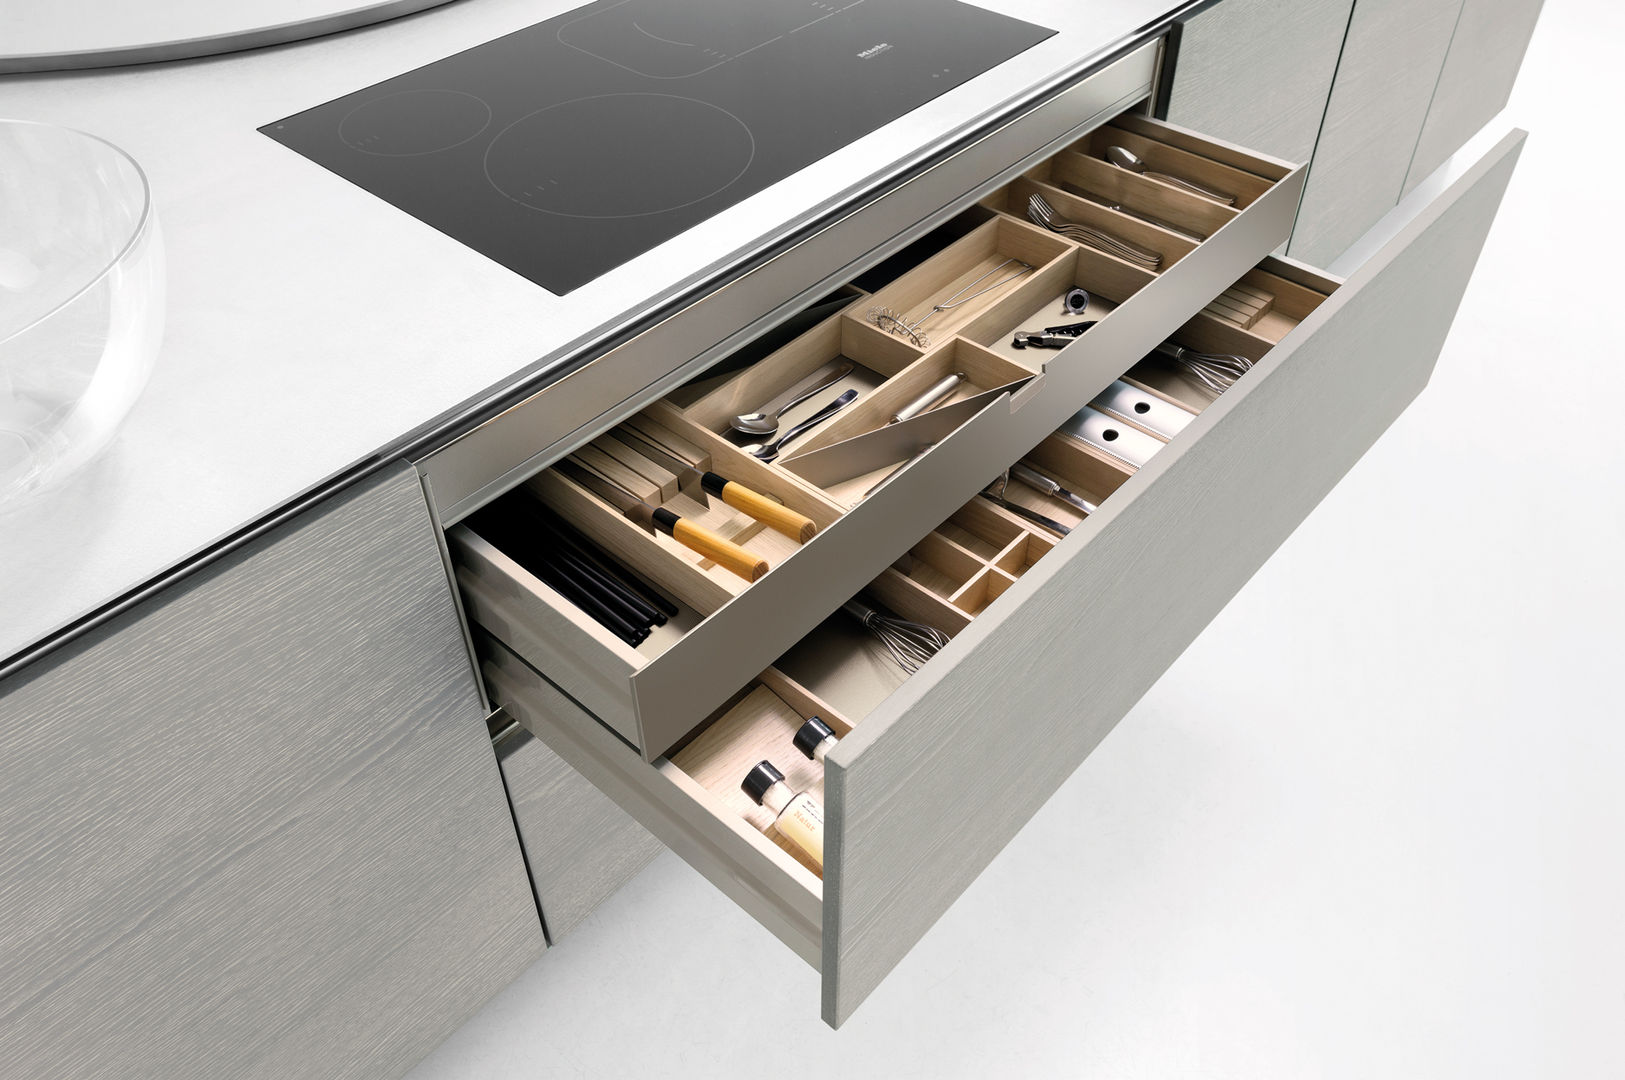 Storage options to make life easier fit Kitchens مطبخ ديكورات واكسسوارات